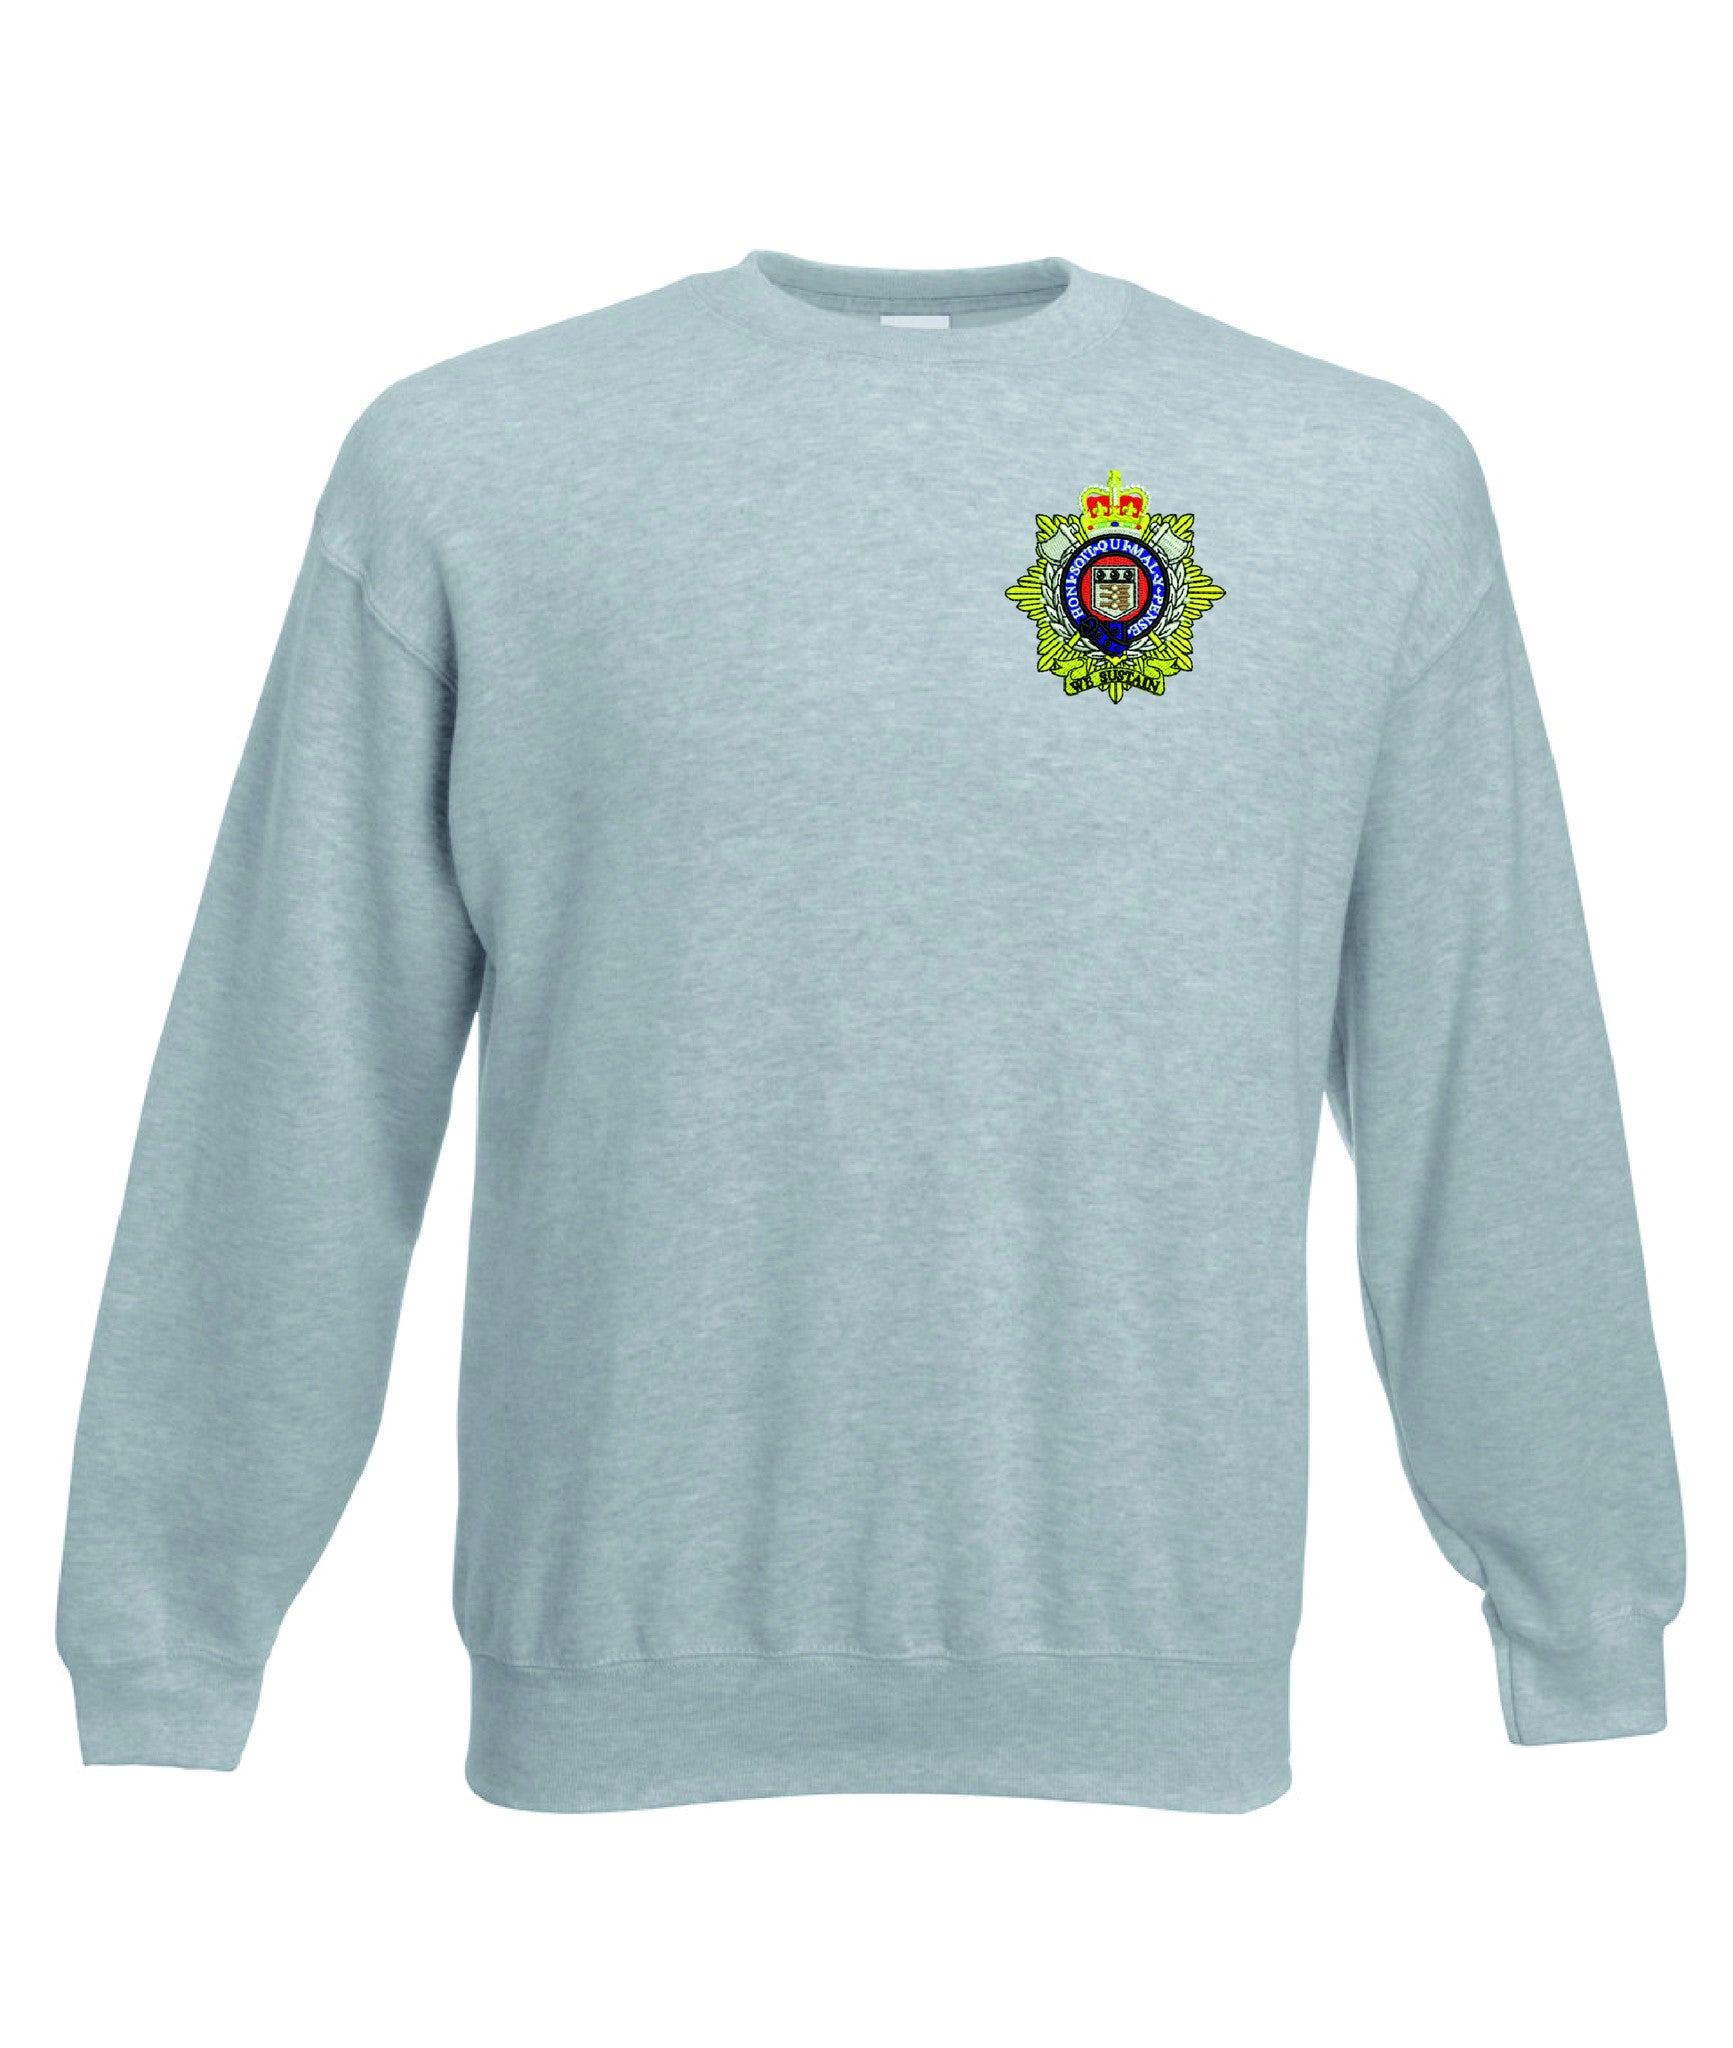 Royal Logistic Corps Sweatshirt